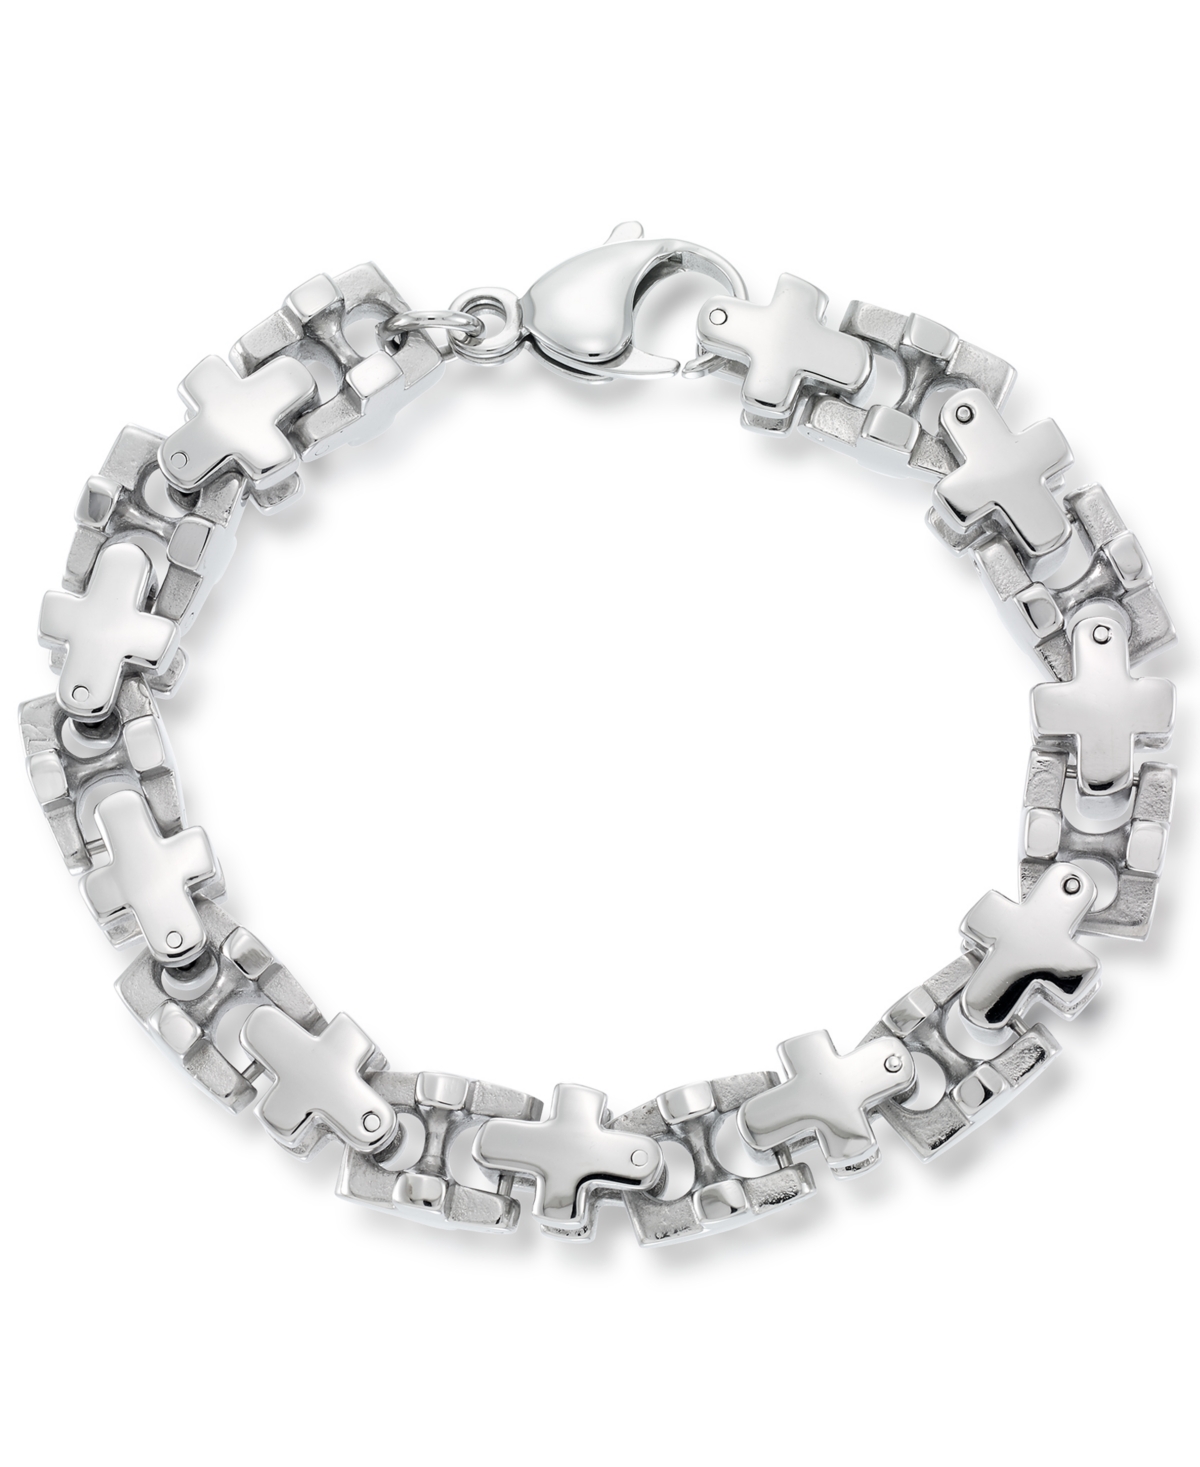 Men's Cross Link Bracelet in Stainless Steel - Stainless Steel